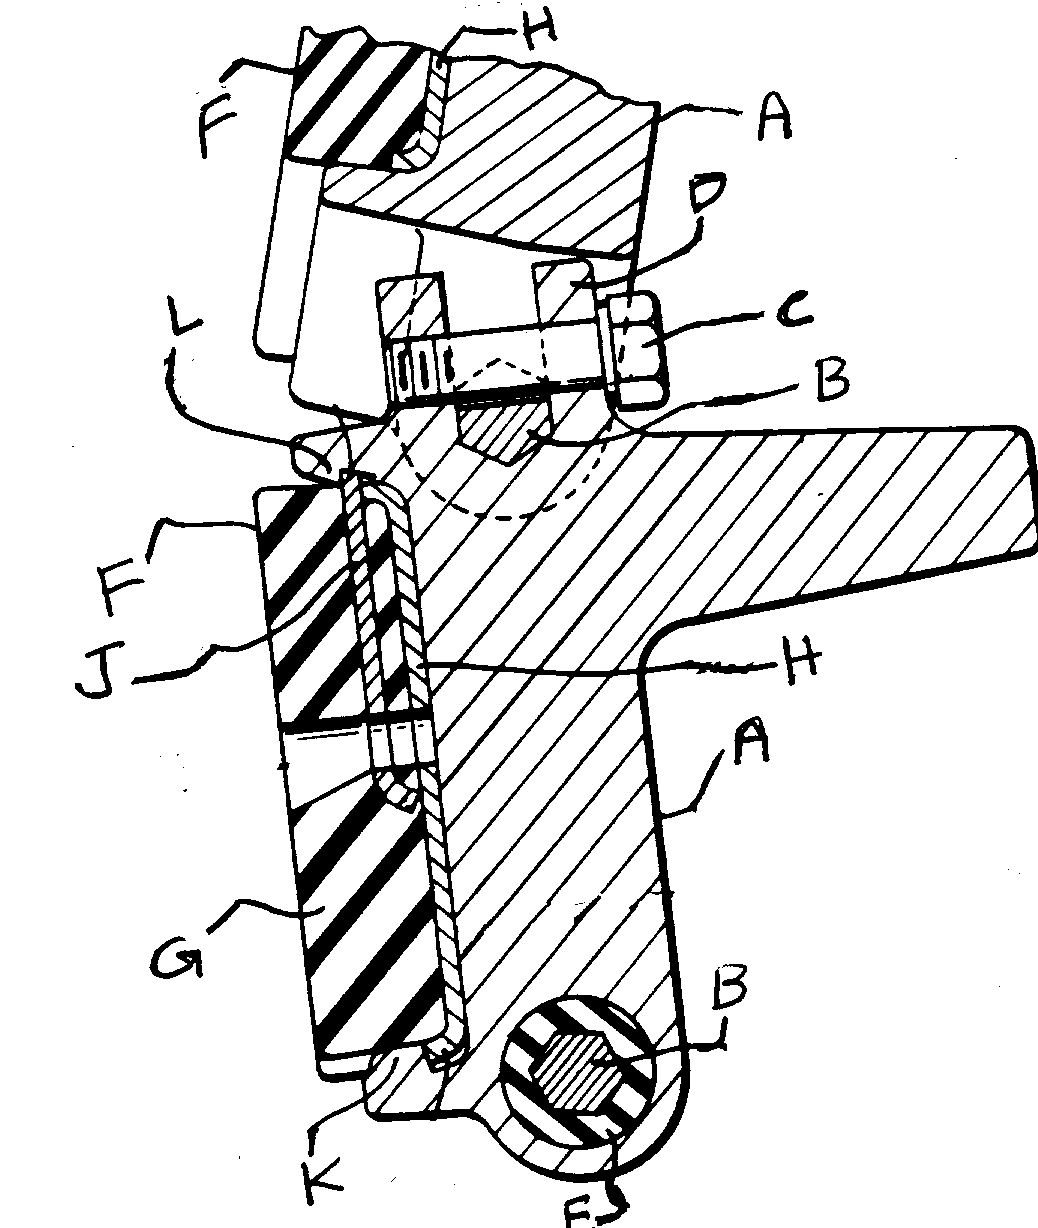 A - Grouser plate; B - Bushing pin; C - Lock bolt; D - Bifurcatedfastening plate; E - Resilient bushing; F, G - Rubberlike treadpad; H - Support plate; J - Support plate; K, L - Grouser platelips
